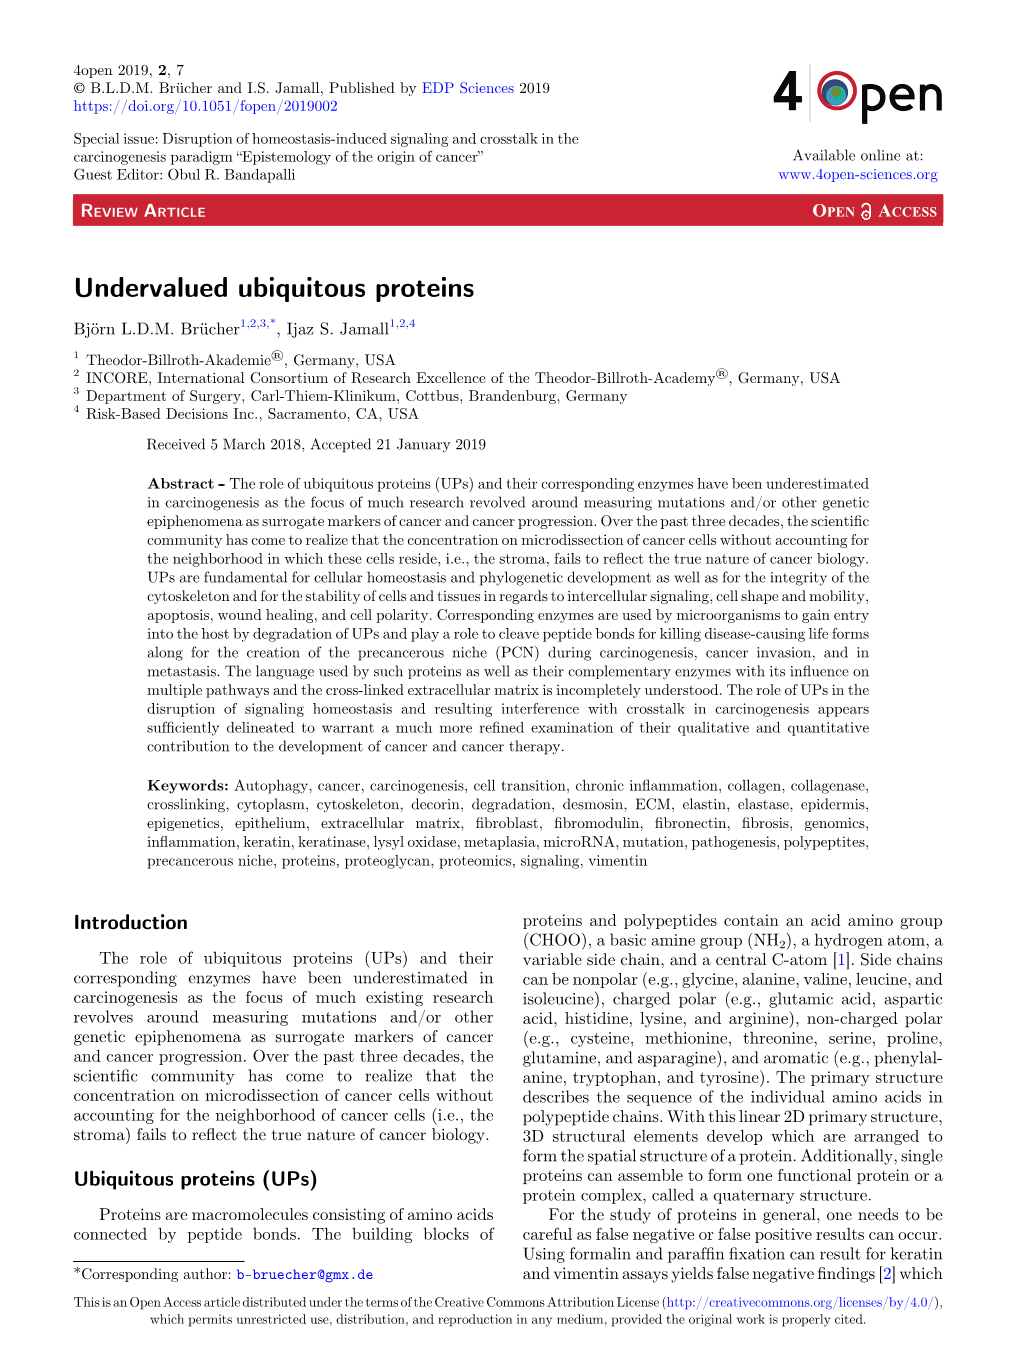 Undervalued Ubiquitous Proteins